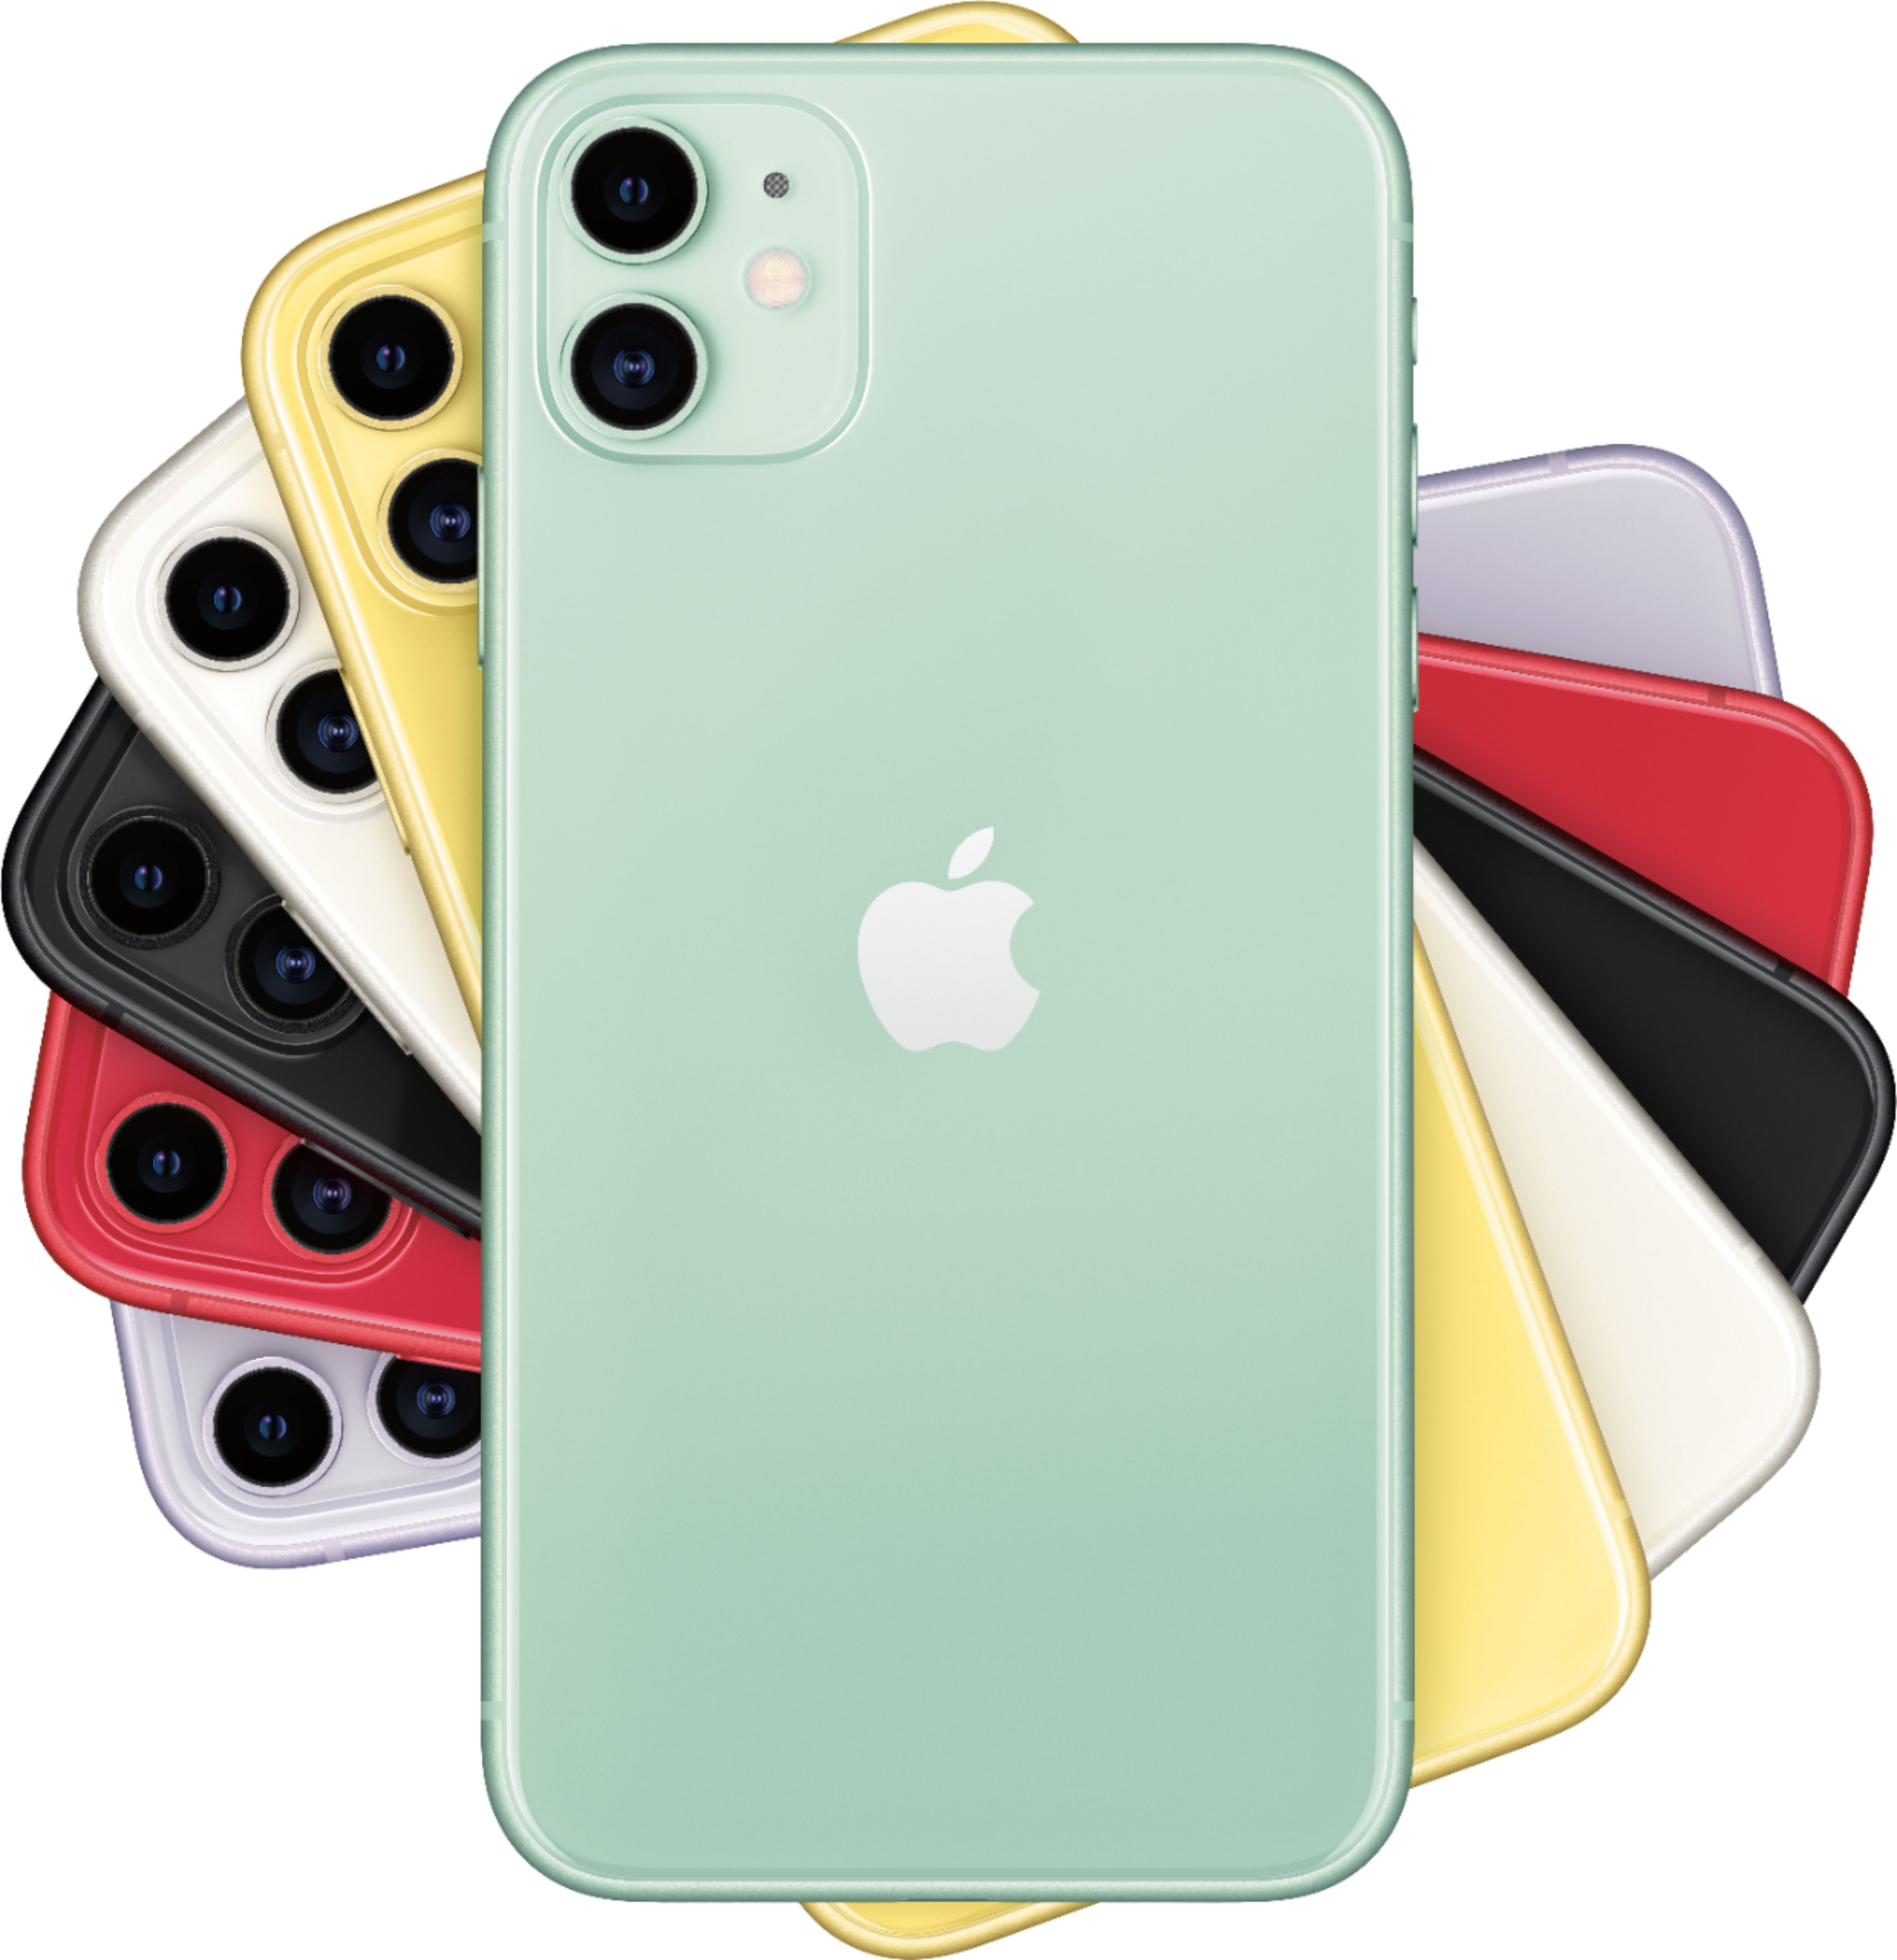 Apple iPhone 11 128GB Green (Unlocked) MWL02LL/A - Best Buy